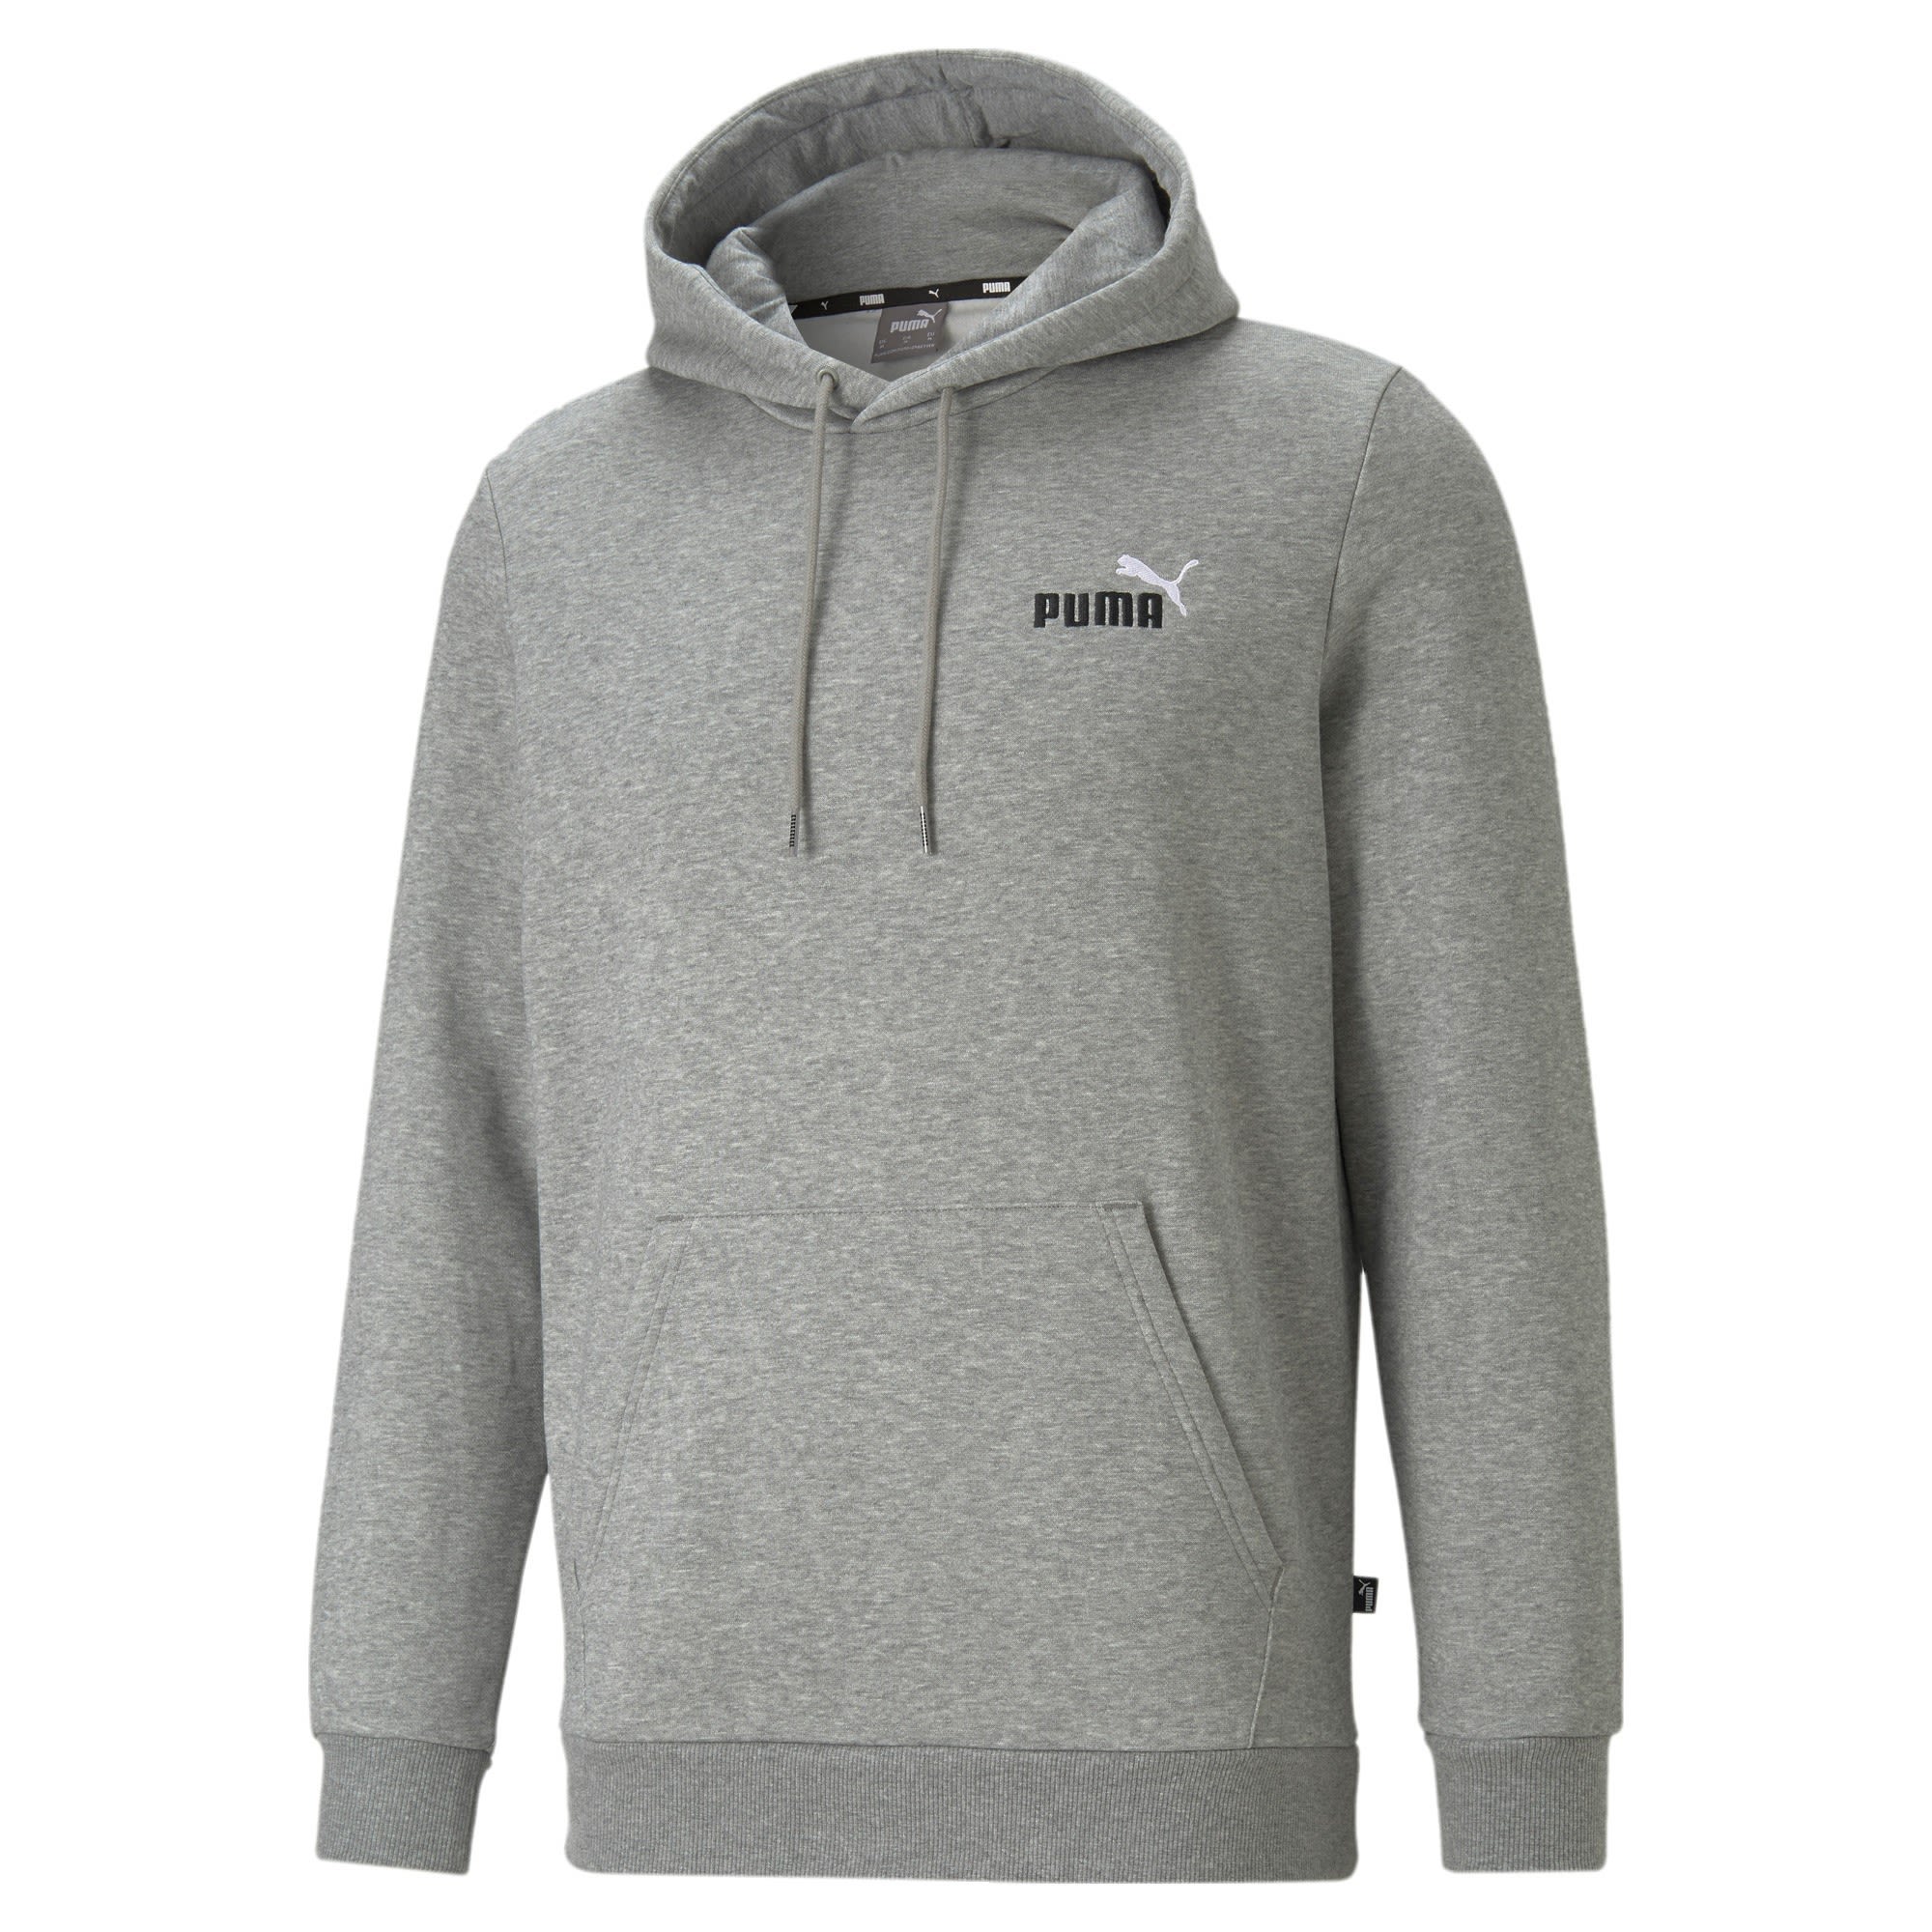 Puma Essentials+ Embroidery Hoodie Grau- Male Sweaters und Hoodies- Grsse S - Farbe Medium Gray Heather